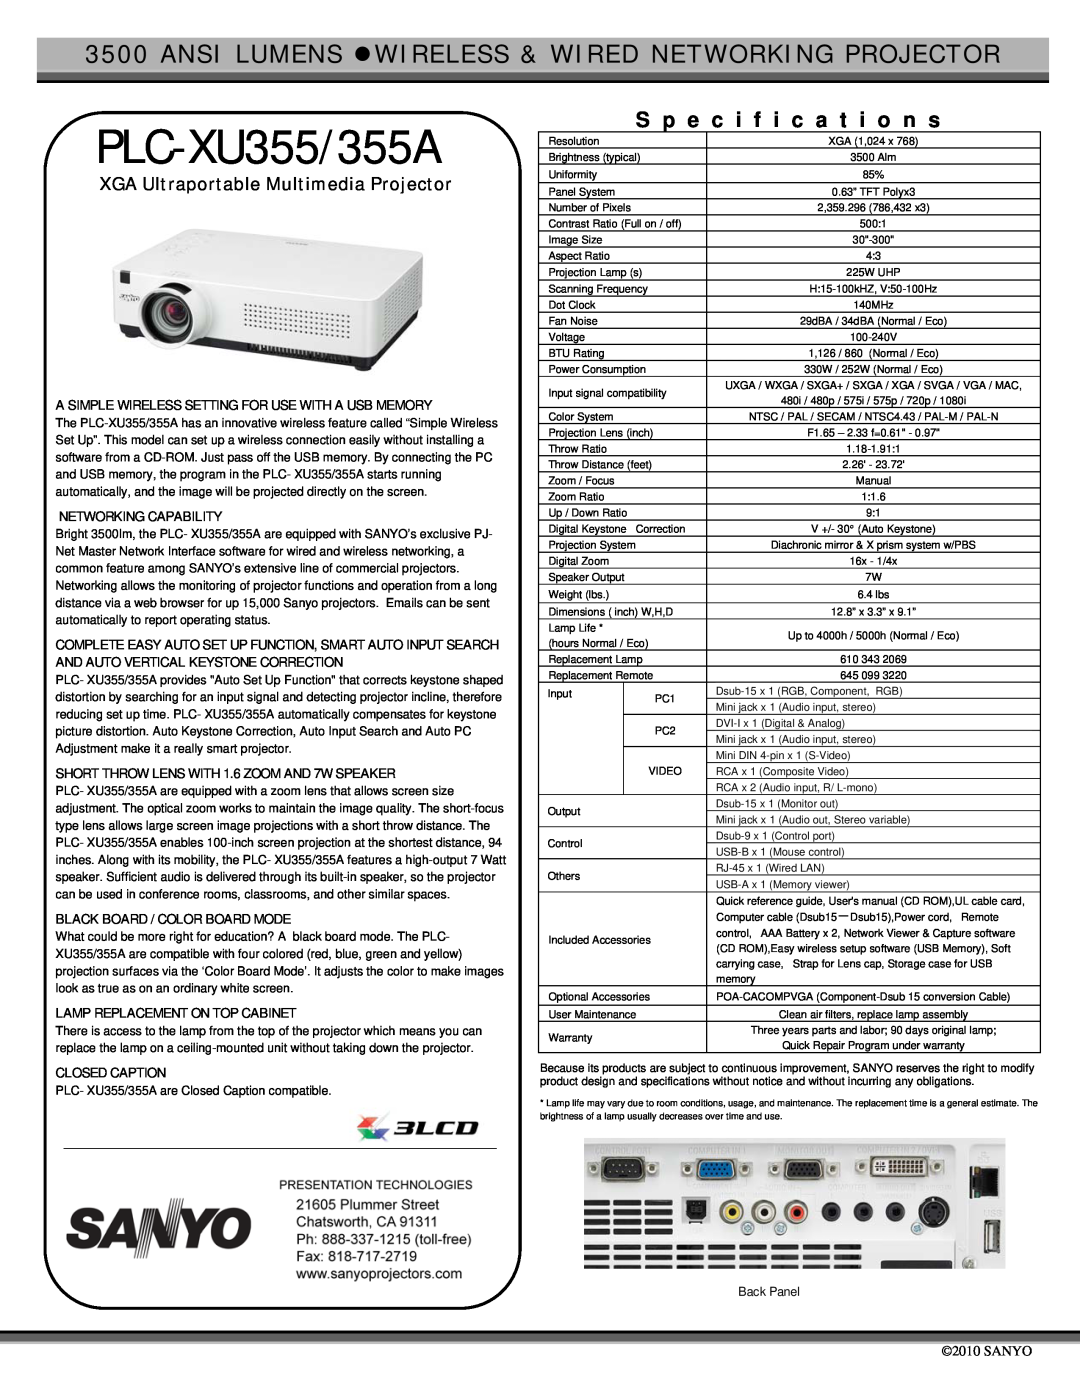 Sanyo PLC-XU355 specifications S p e c i f i c a t i o n s, XGA Ultraportable Multimedia Projector, Networking Capability 